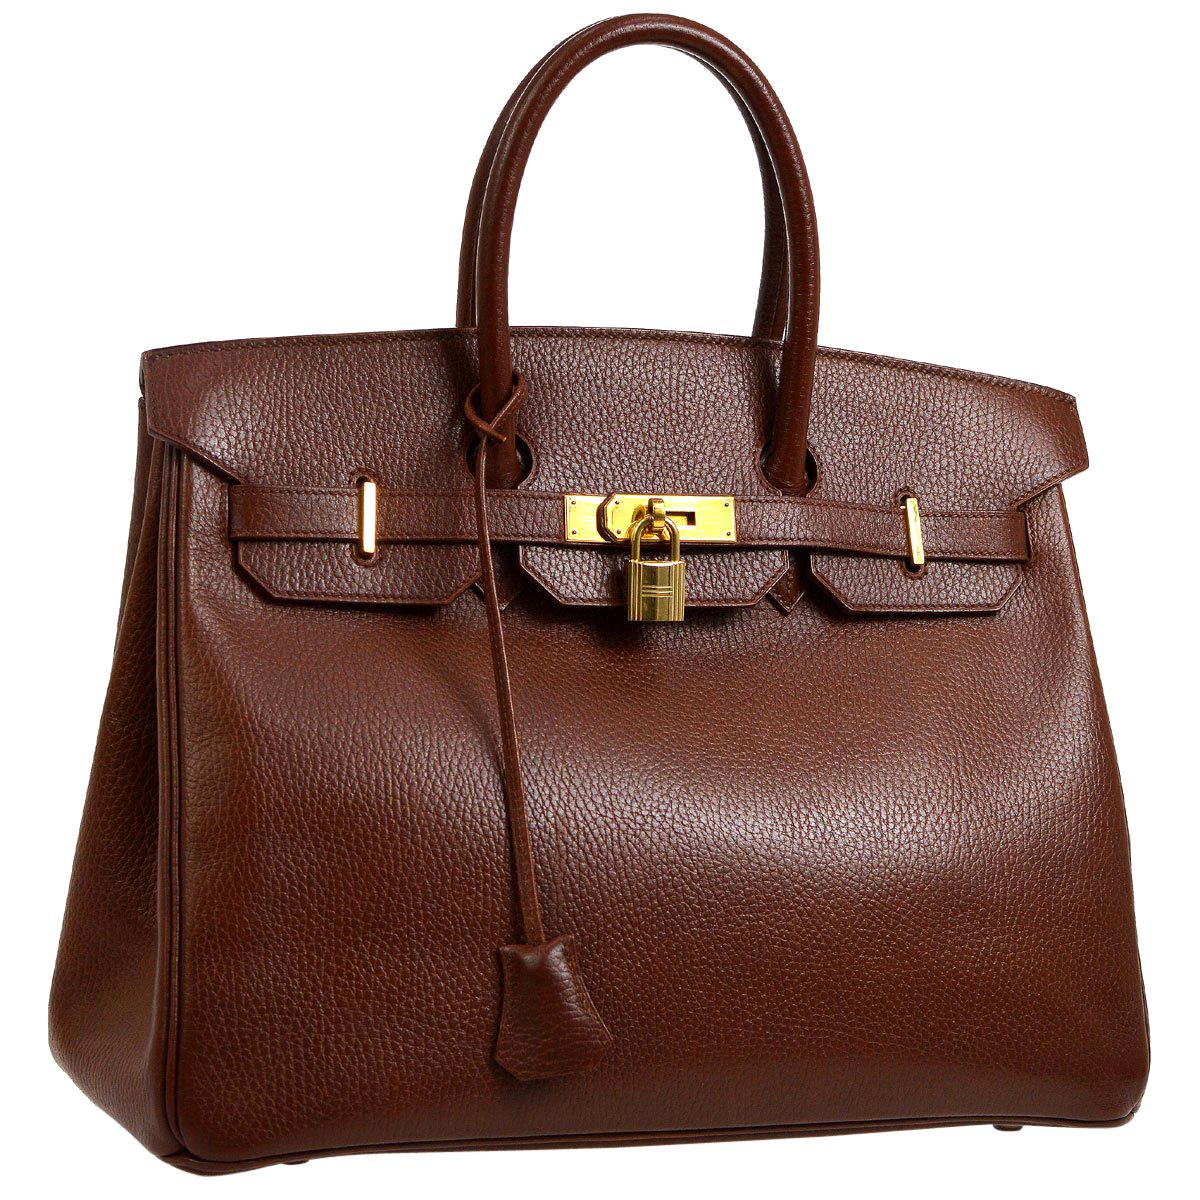 Hermes Birkin 35 Chocolate Leather Gold Travel Carryall Top Handle Satchel Tote